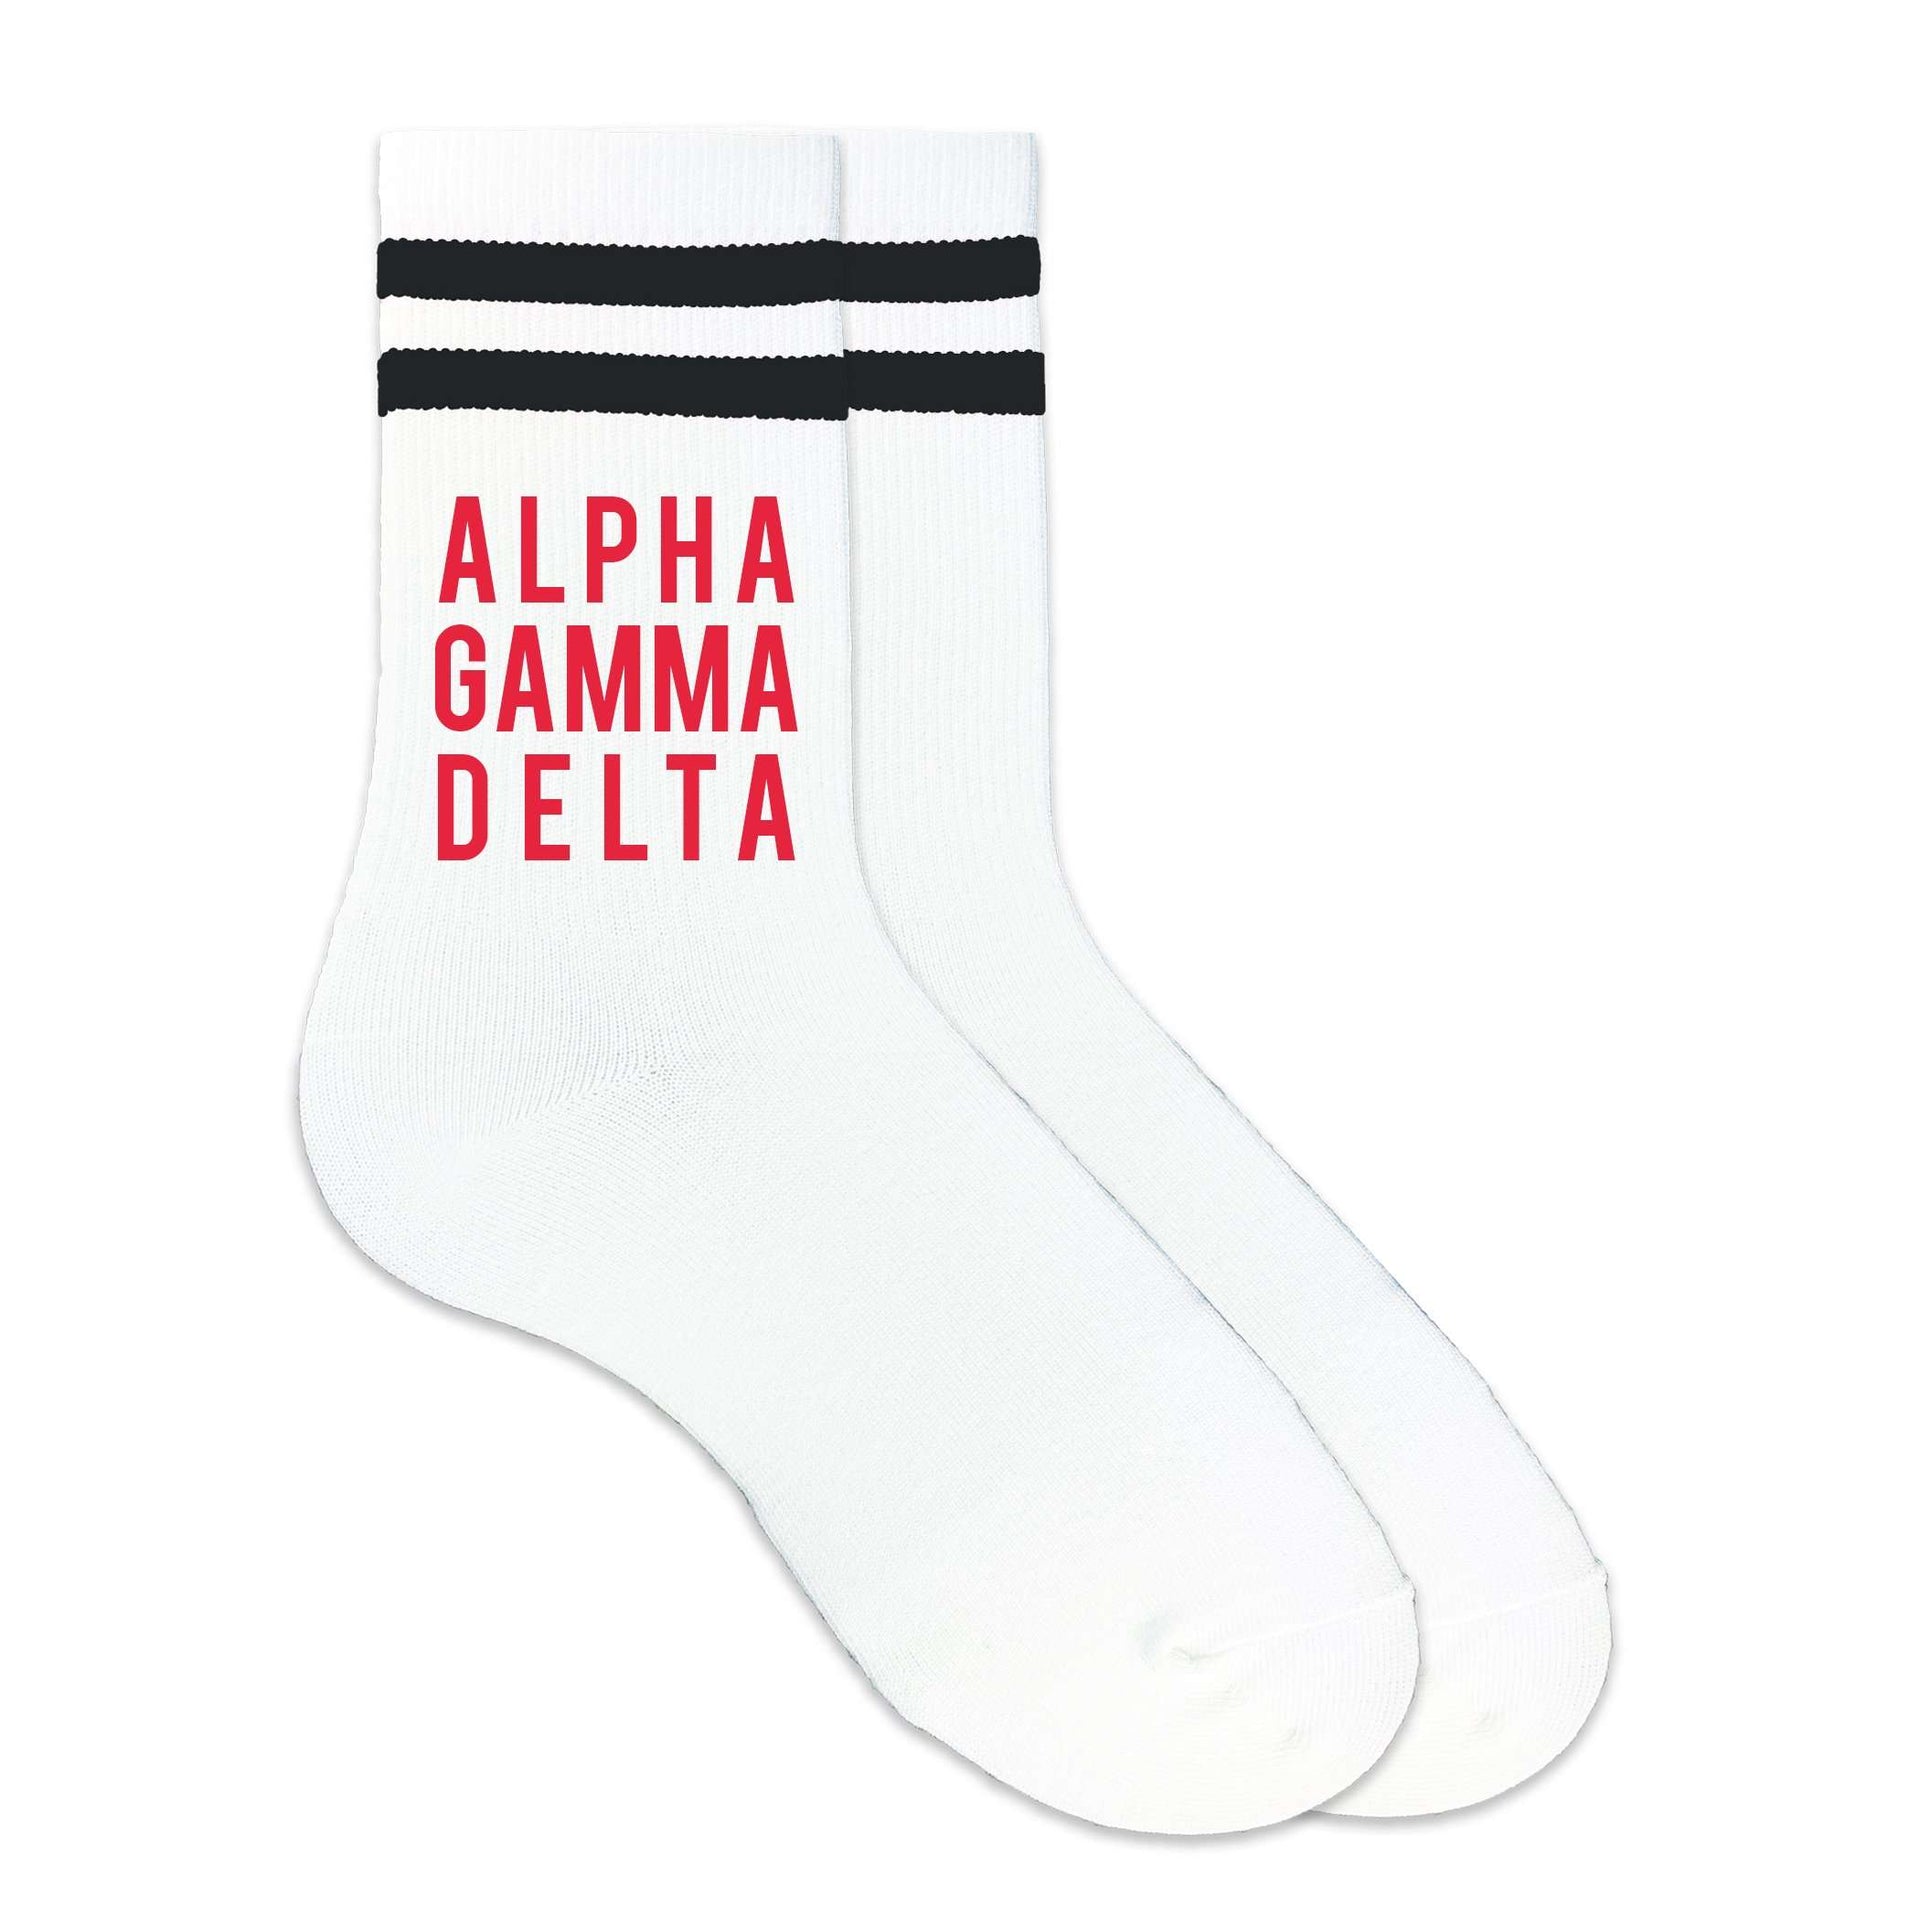 Alpha Gamma Delta sorority name custom printed on black striped crew socks